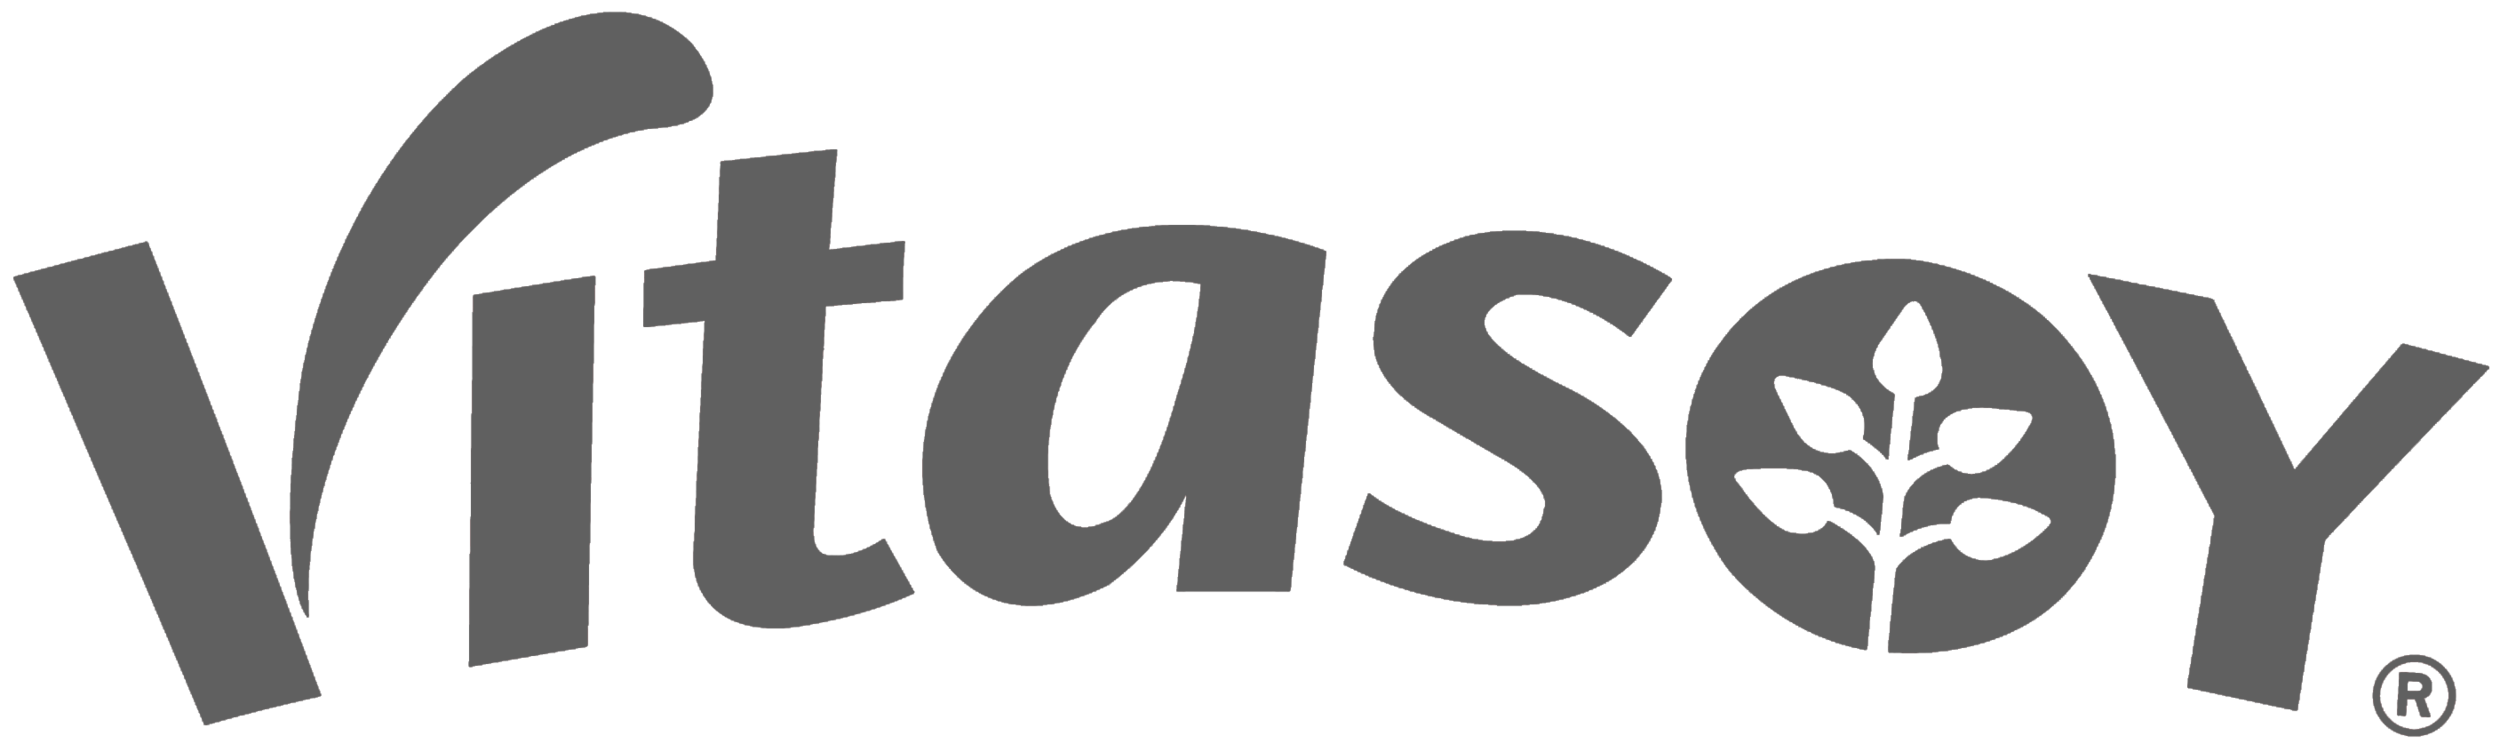 Vitasoy Corp Logo-PMS 185 High Res.png